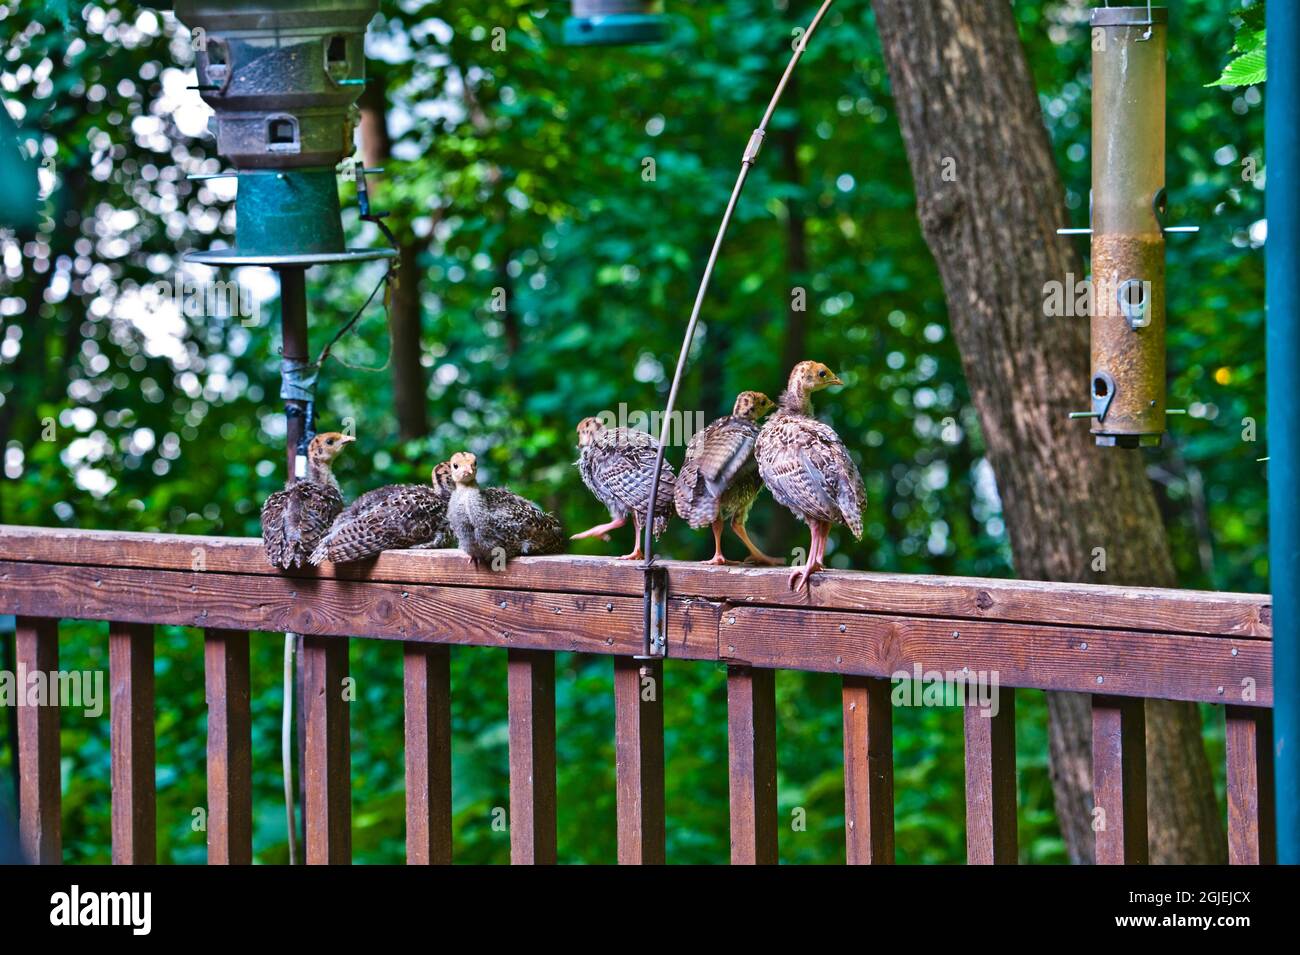 USA, Minnesota, Mendota Heights, Wild Turkey Poults on Deck Railing Stock Photo